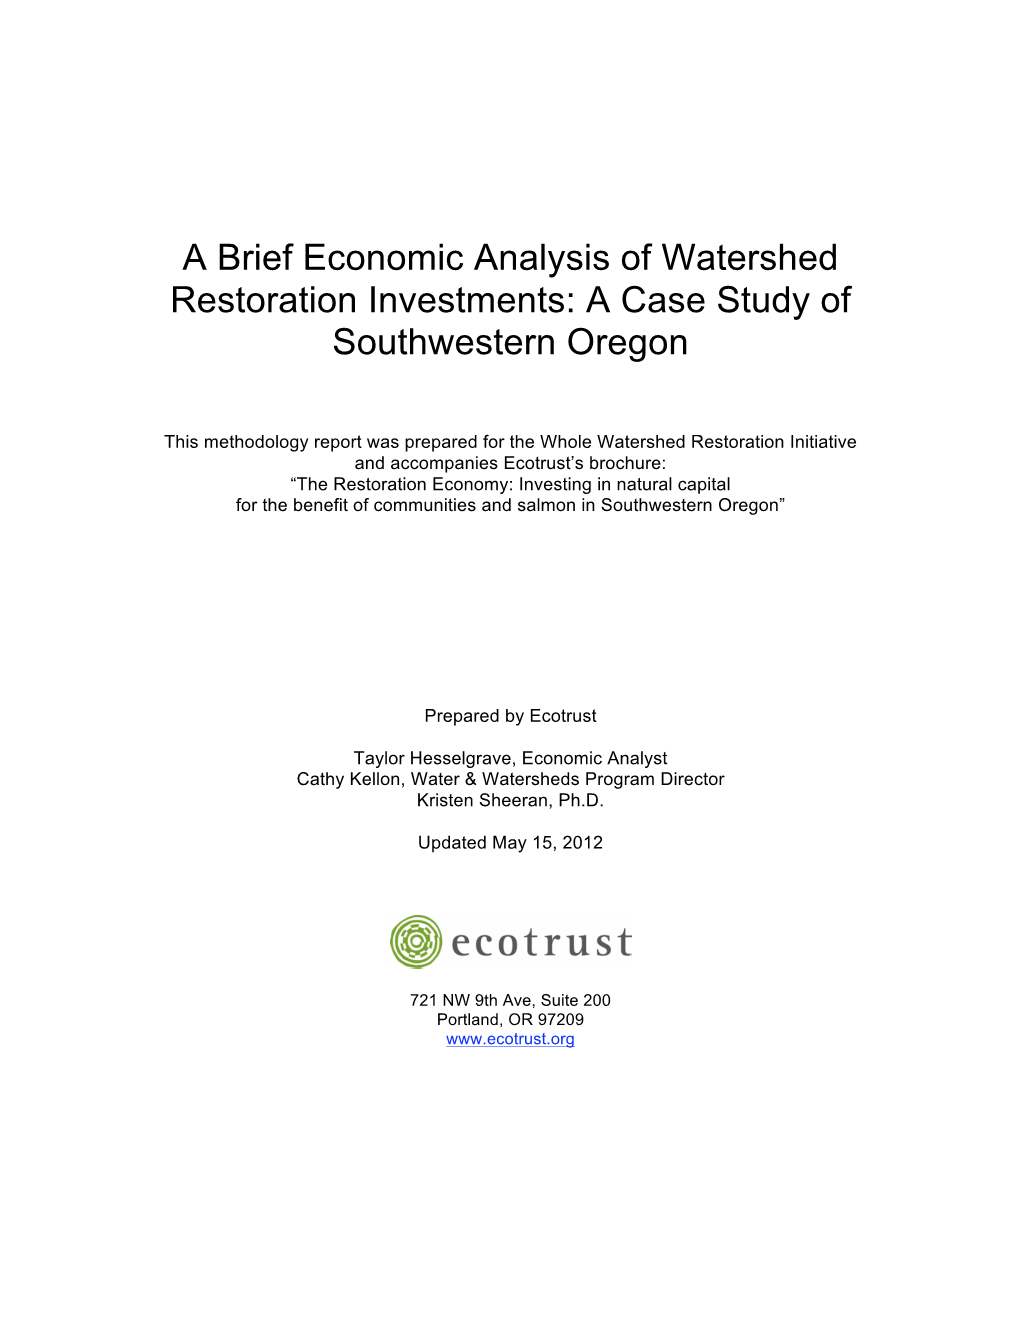 Methods for Value of Watershed Restoration 2.2.12B